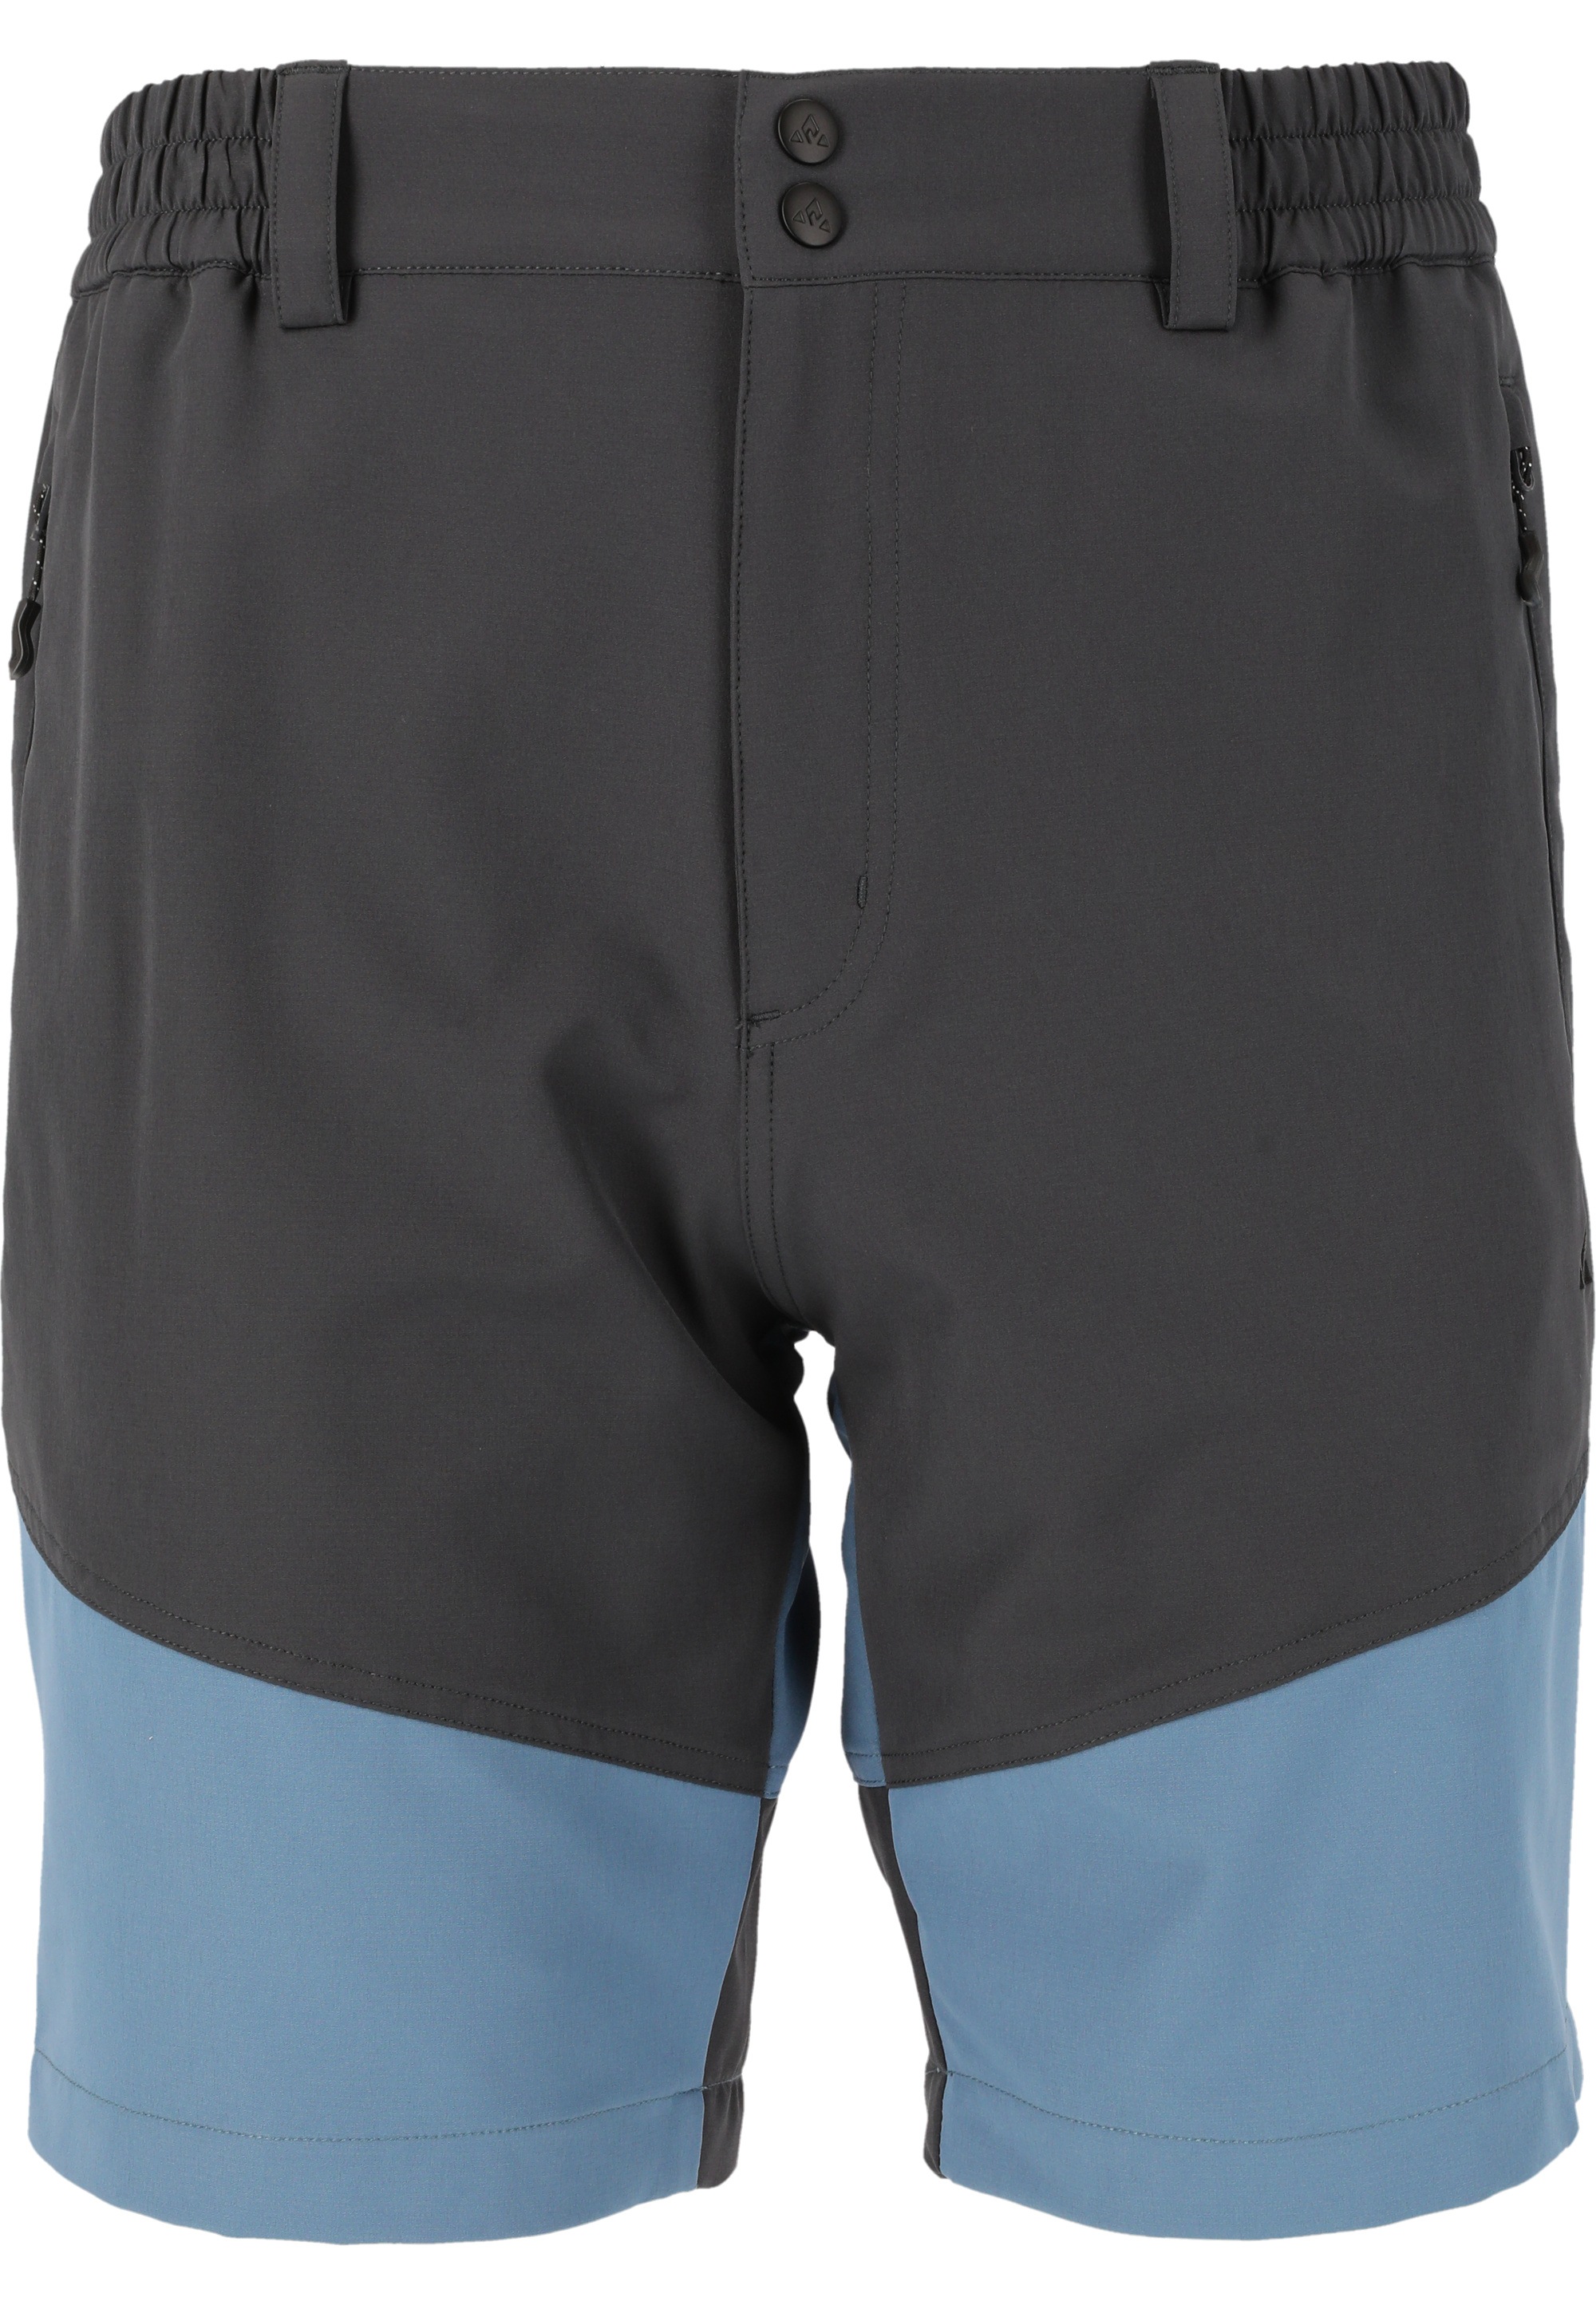 WHISTLER Shorts »AVIAN M ACTIV STRETCH«, mit komfortablem Funktionsstretch